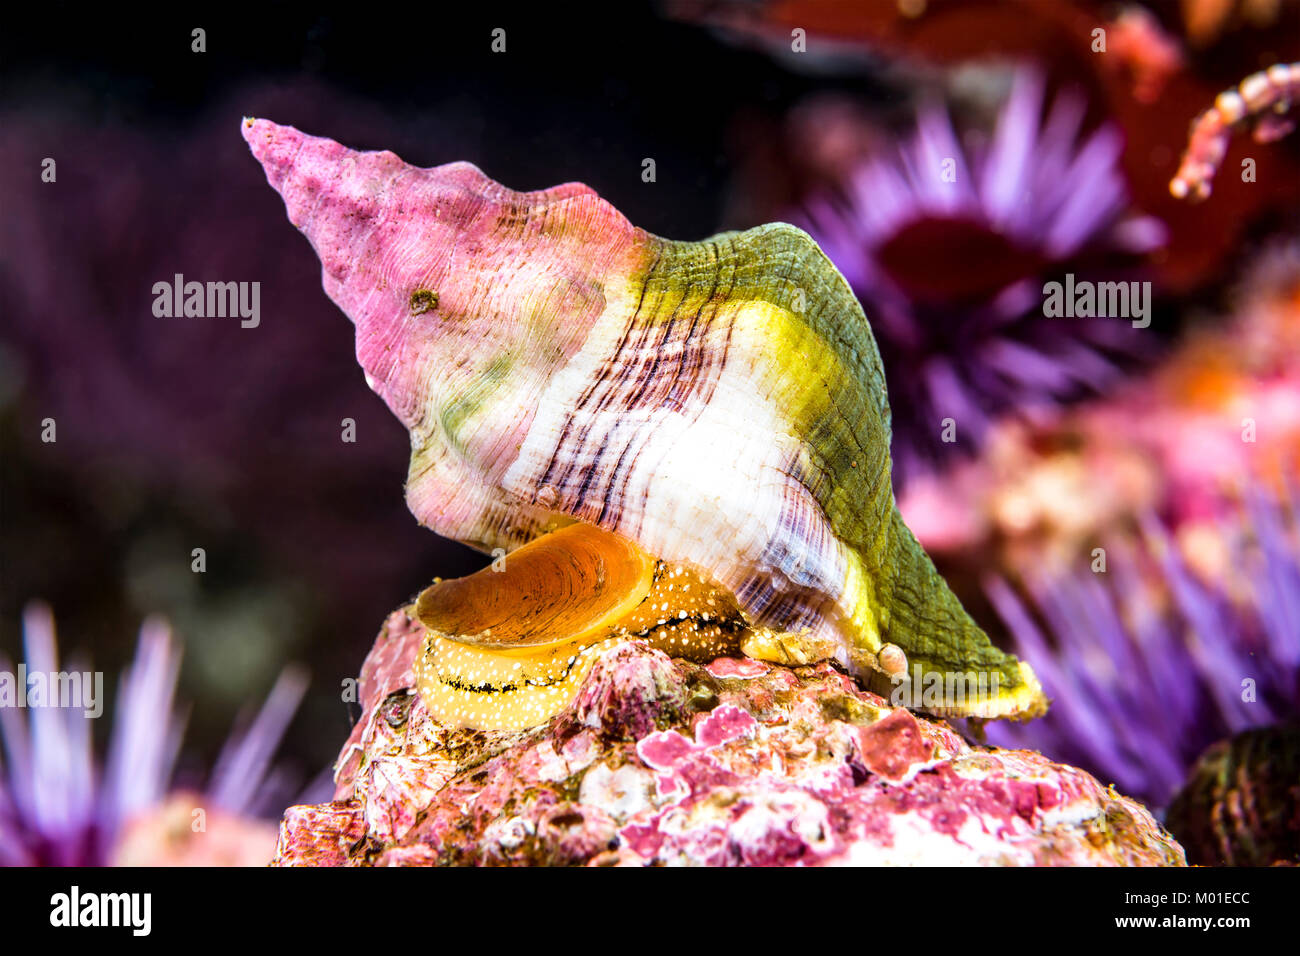 A Kellets Whelk snail crawls along an underwater reef in California's Channel Islands Stock Photo